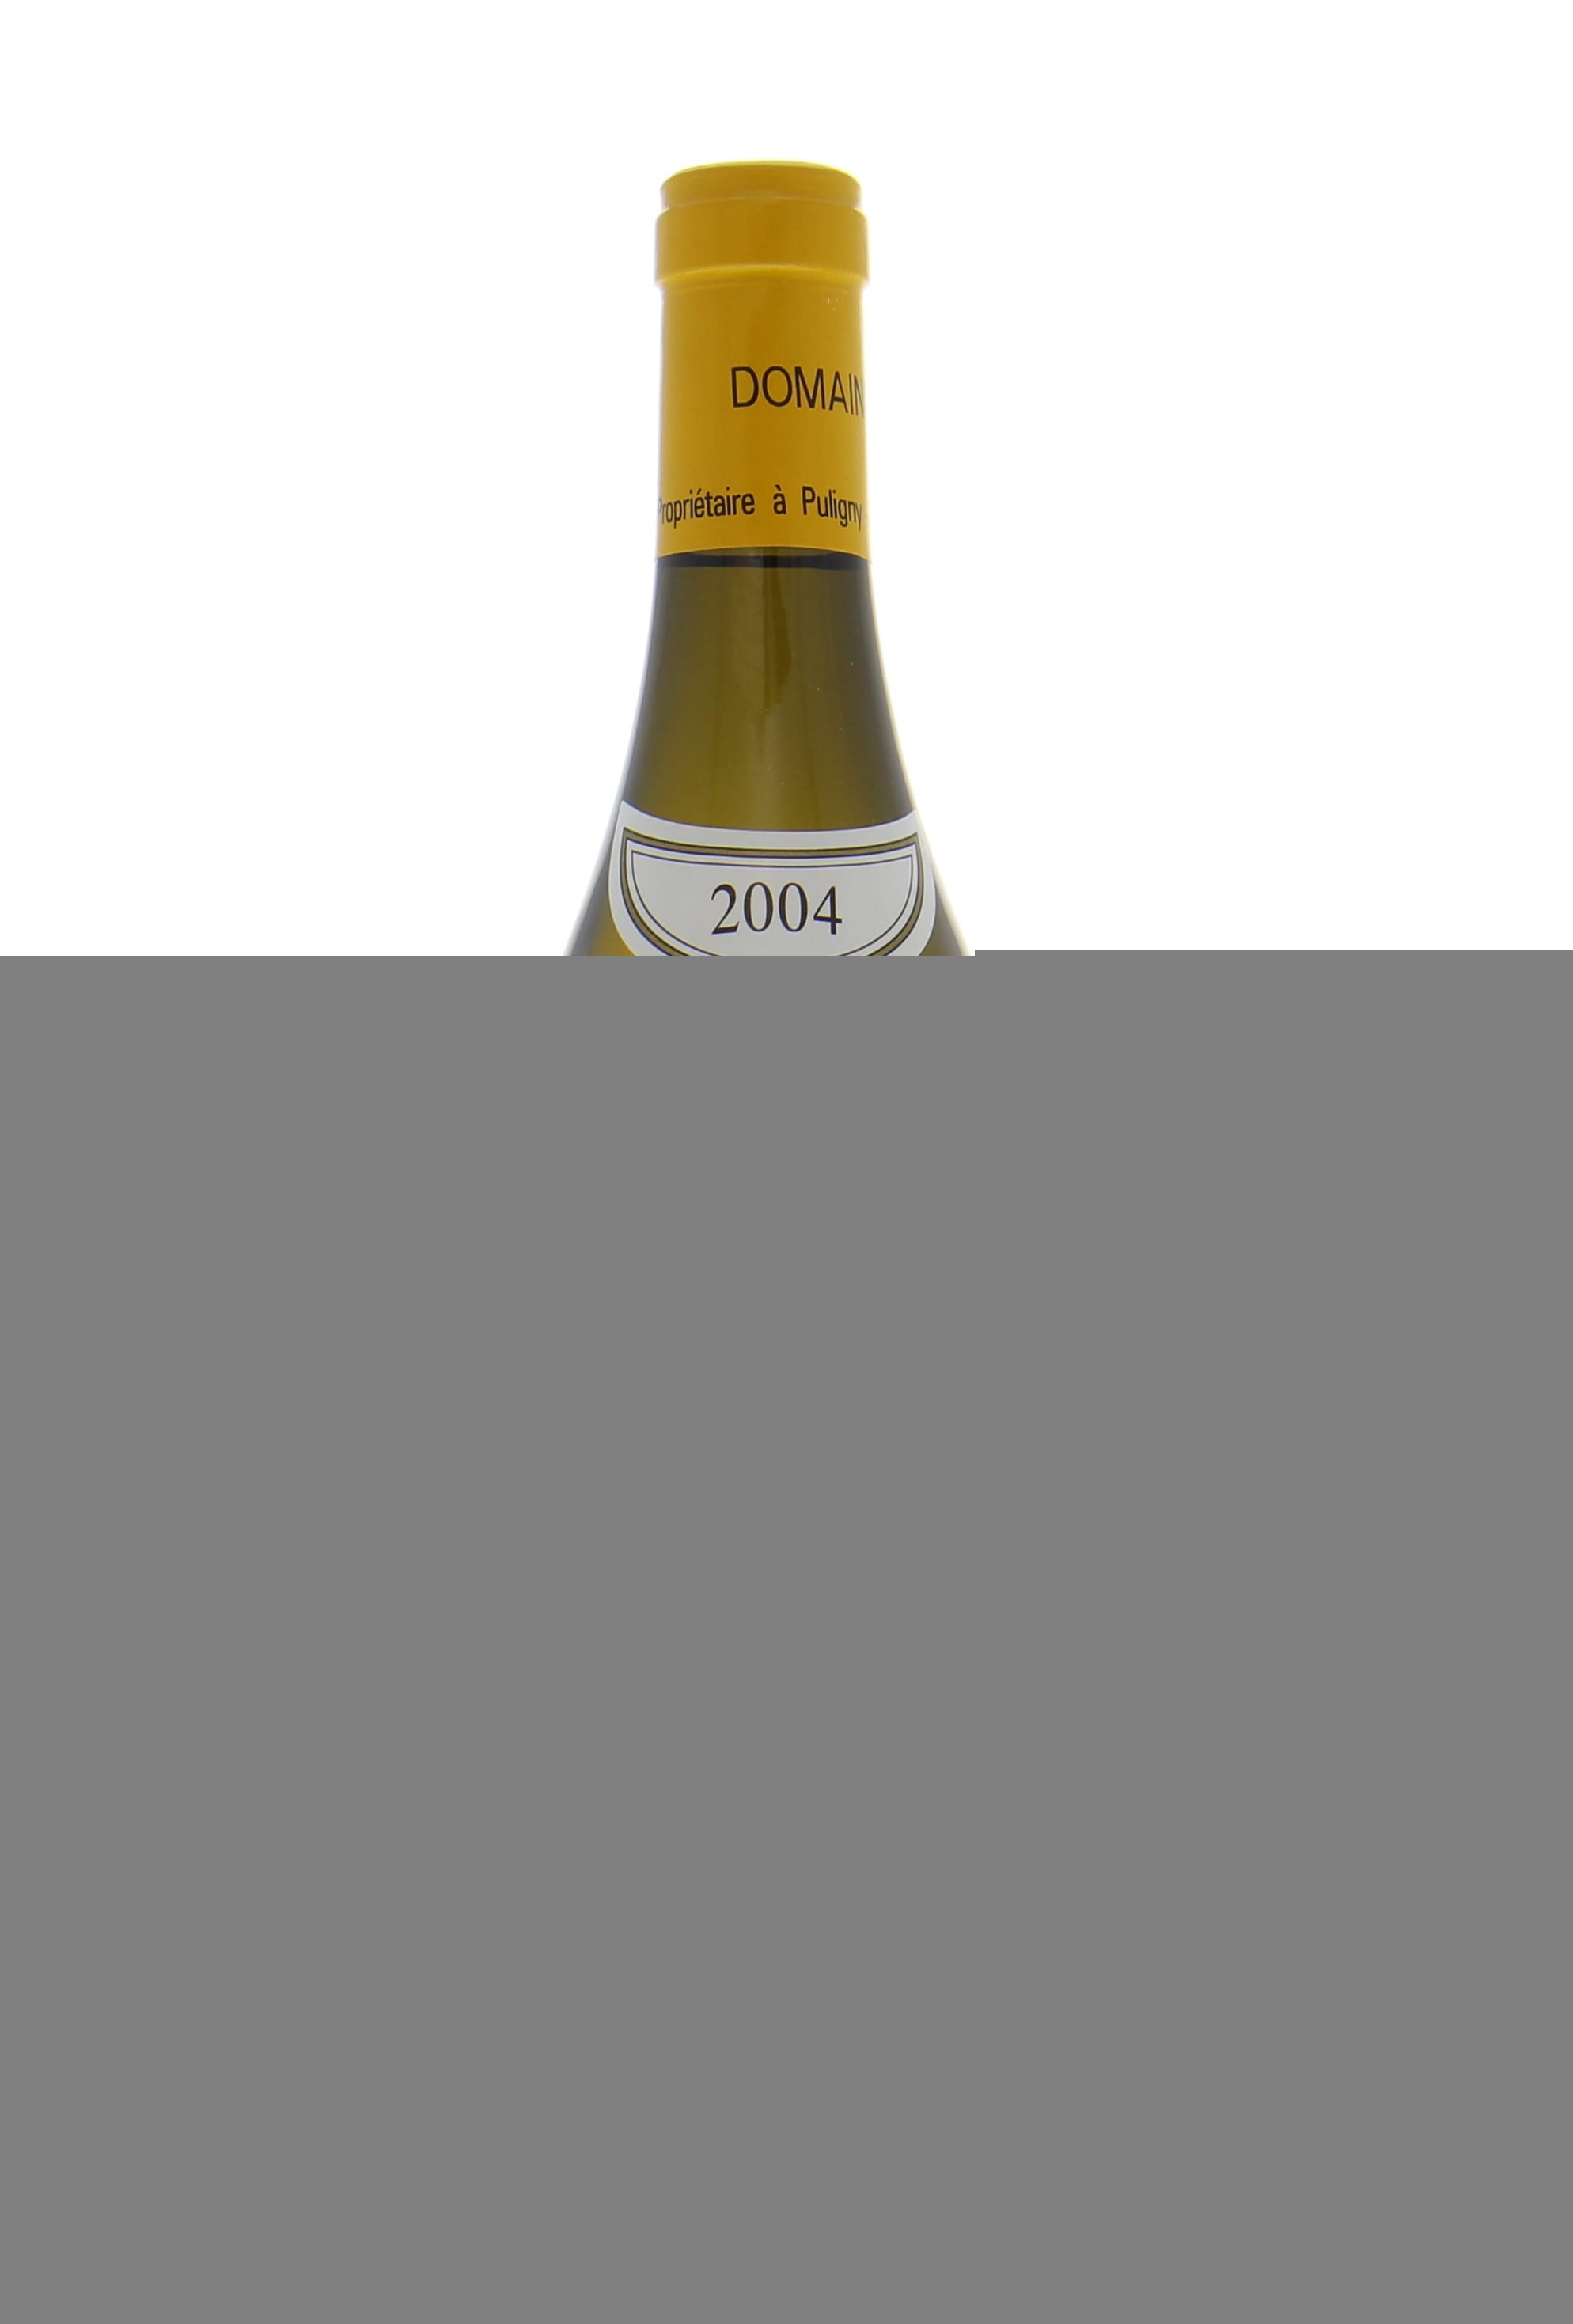 Domaine Leflaive - Bourgogne Blanc 2004 Perfect